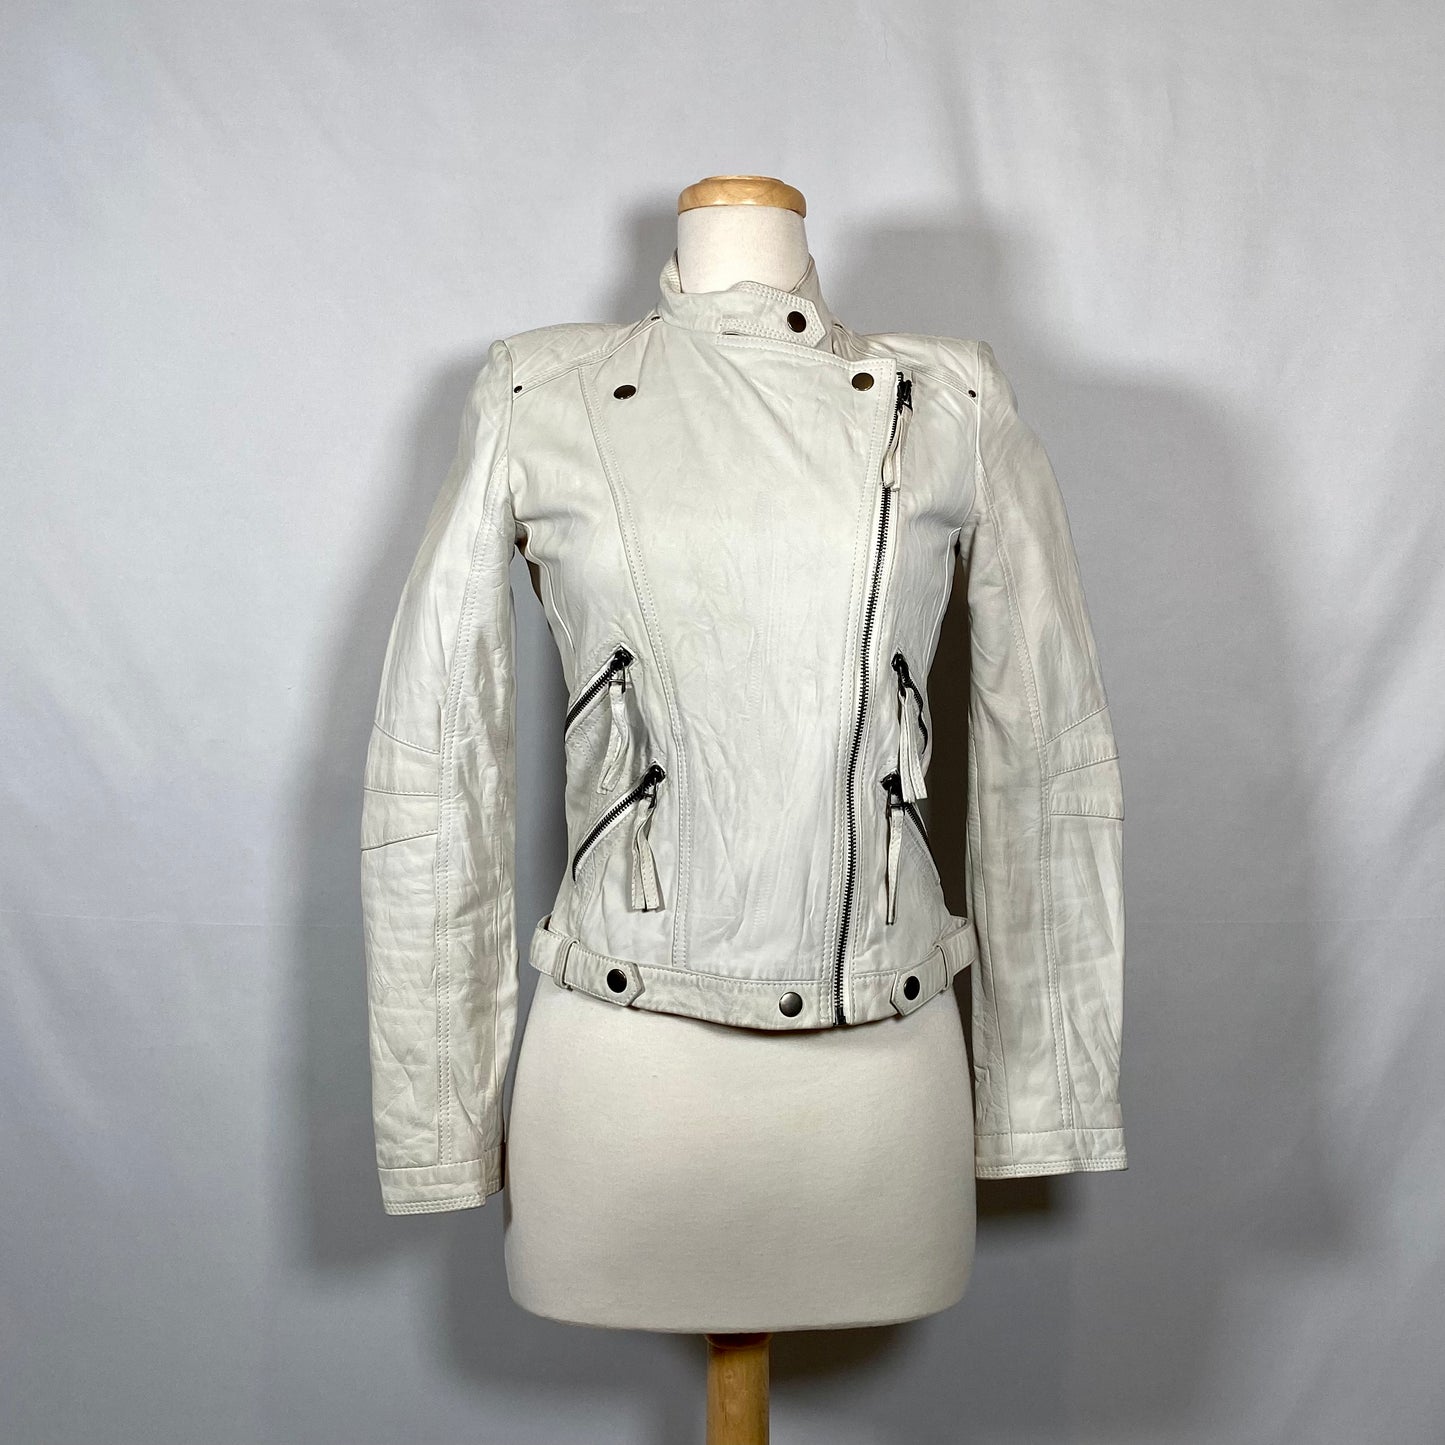 Zara Woman Leather Jacket